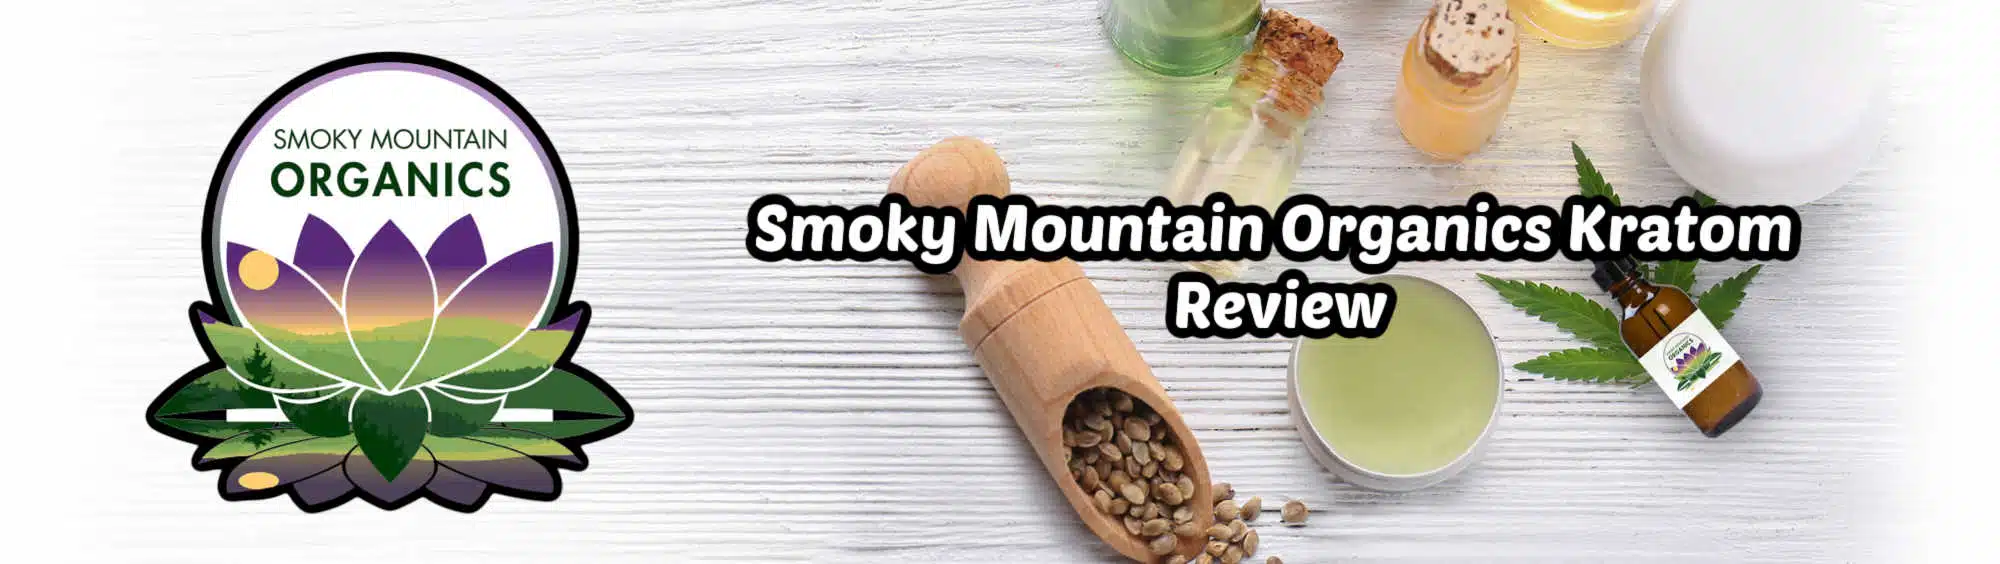 image of smoky mountain organics review